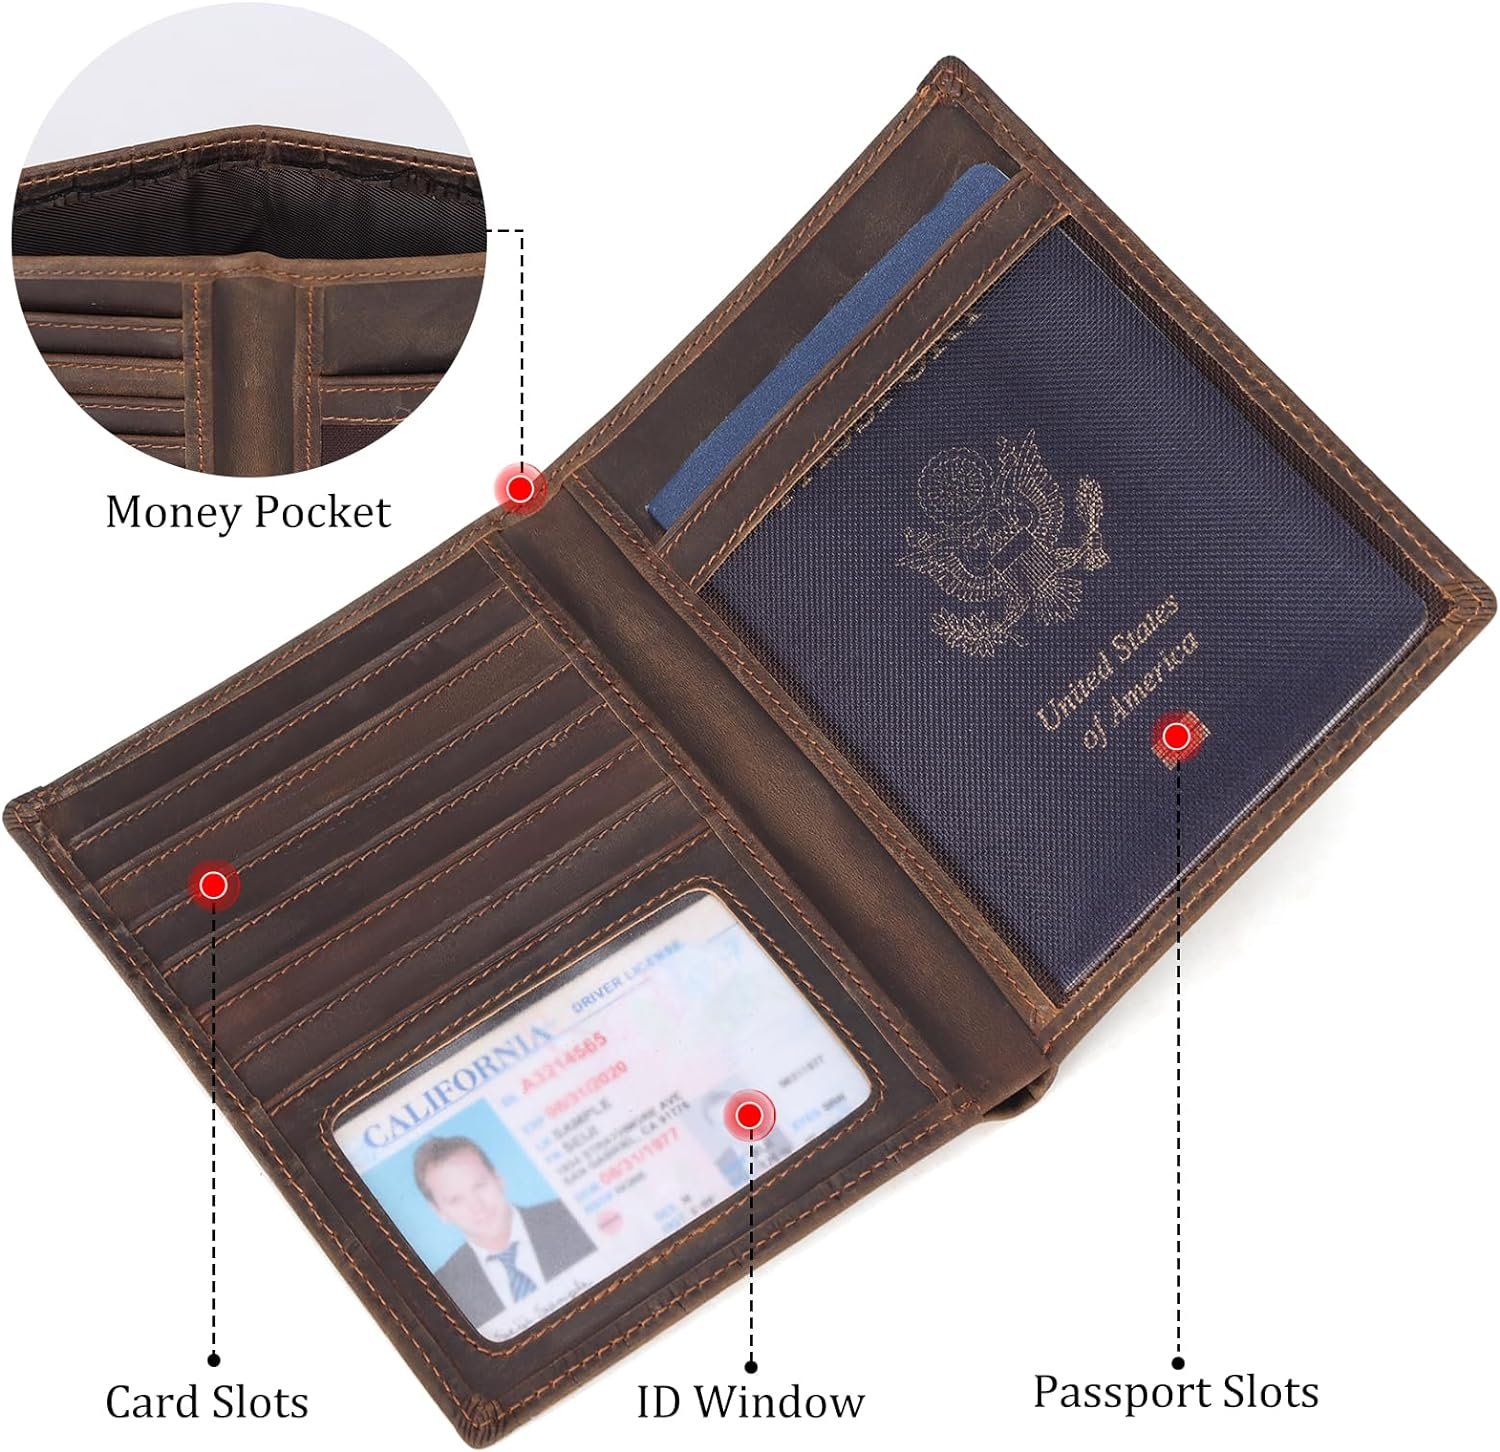 Polare Luxury RFID Blocking Leather Passport Holder Travel Wallet For Men and Women (Dark Brown) Review